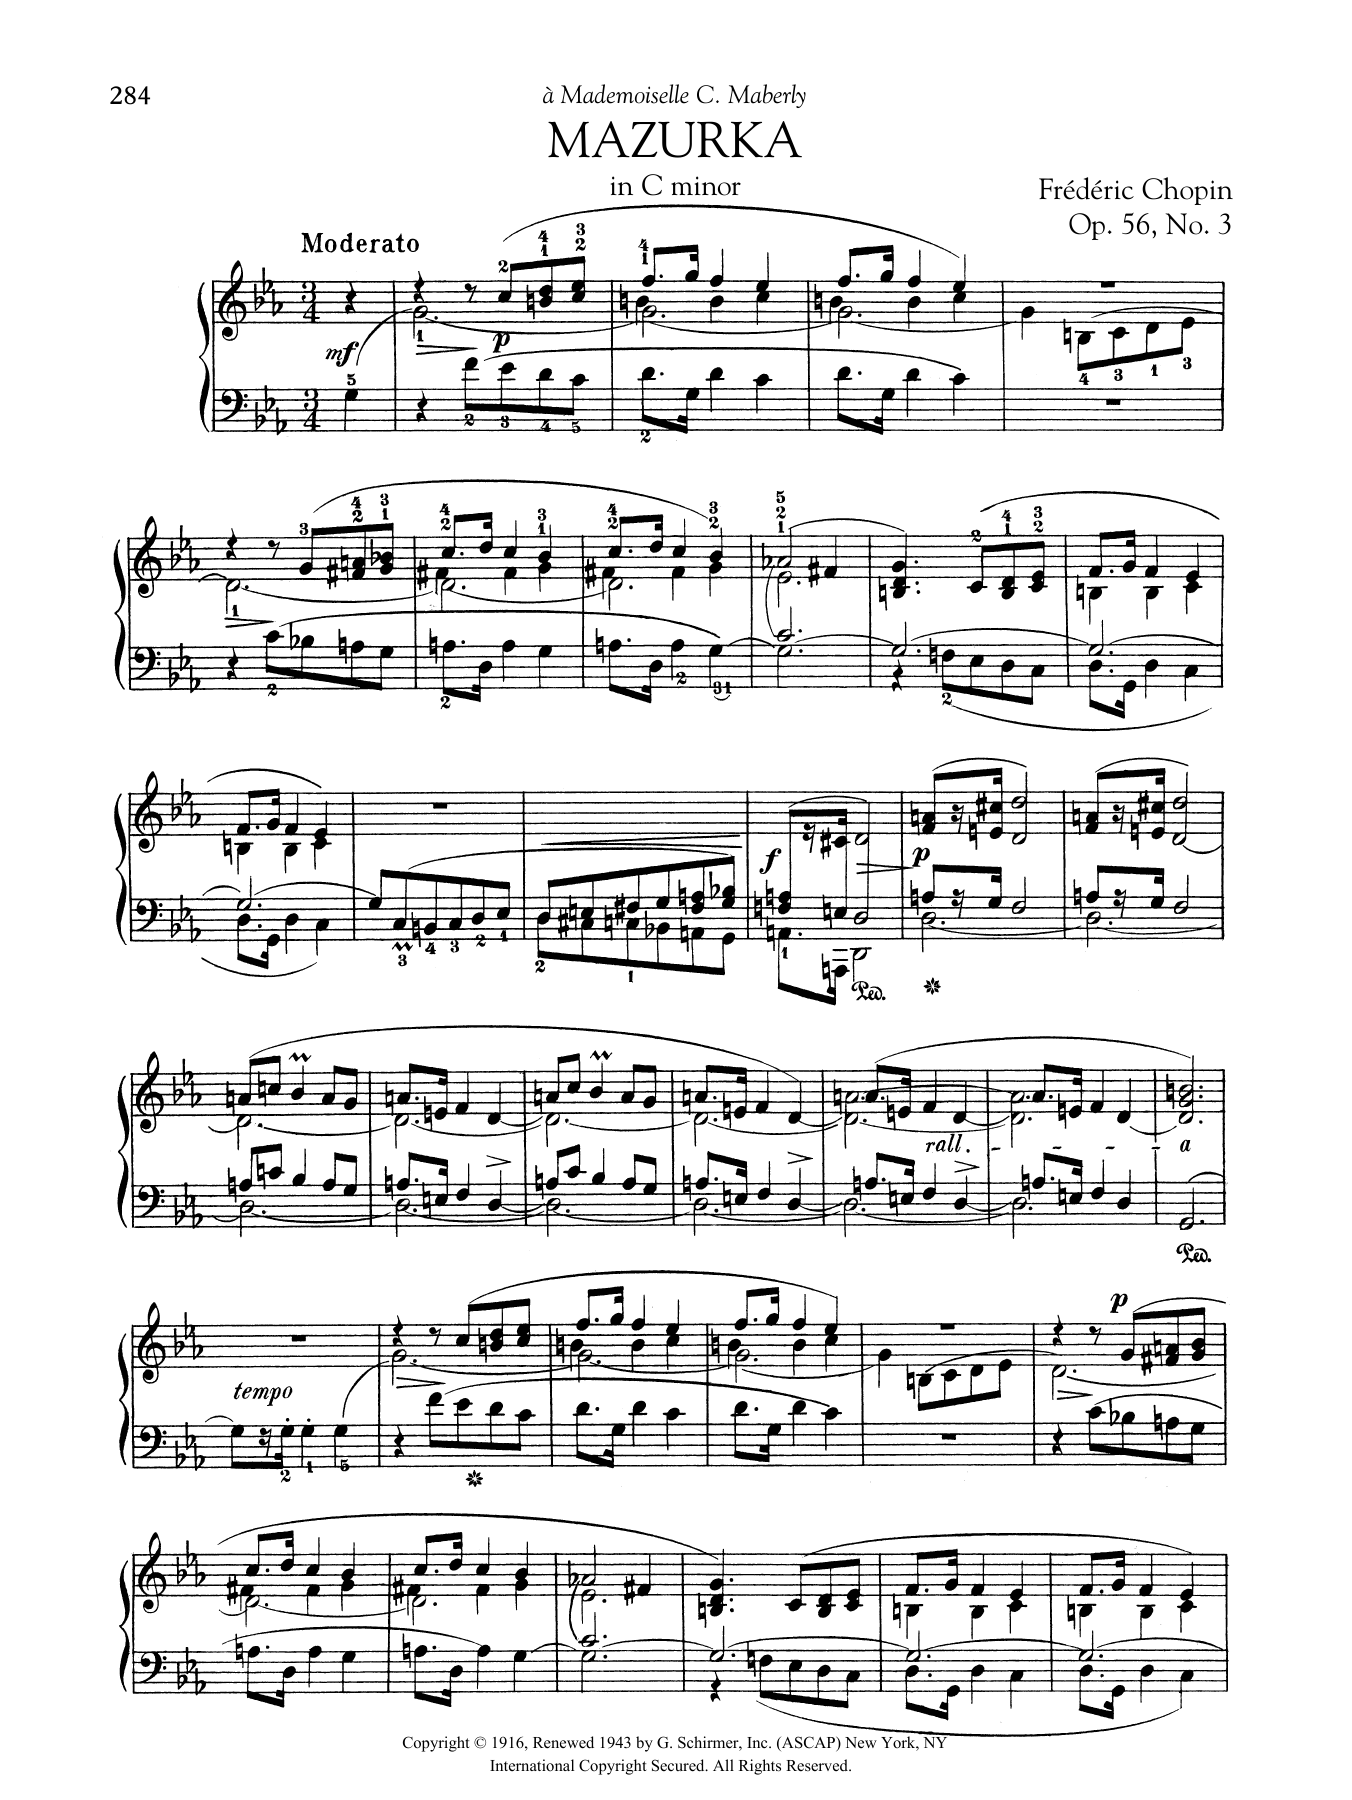 Download Frederic Chopin Mazurka in C minor, Op. 56, No. 3 Sheet Music